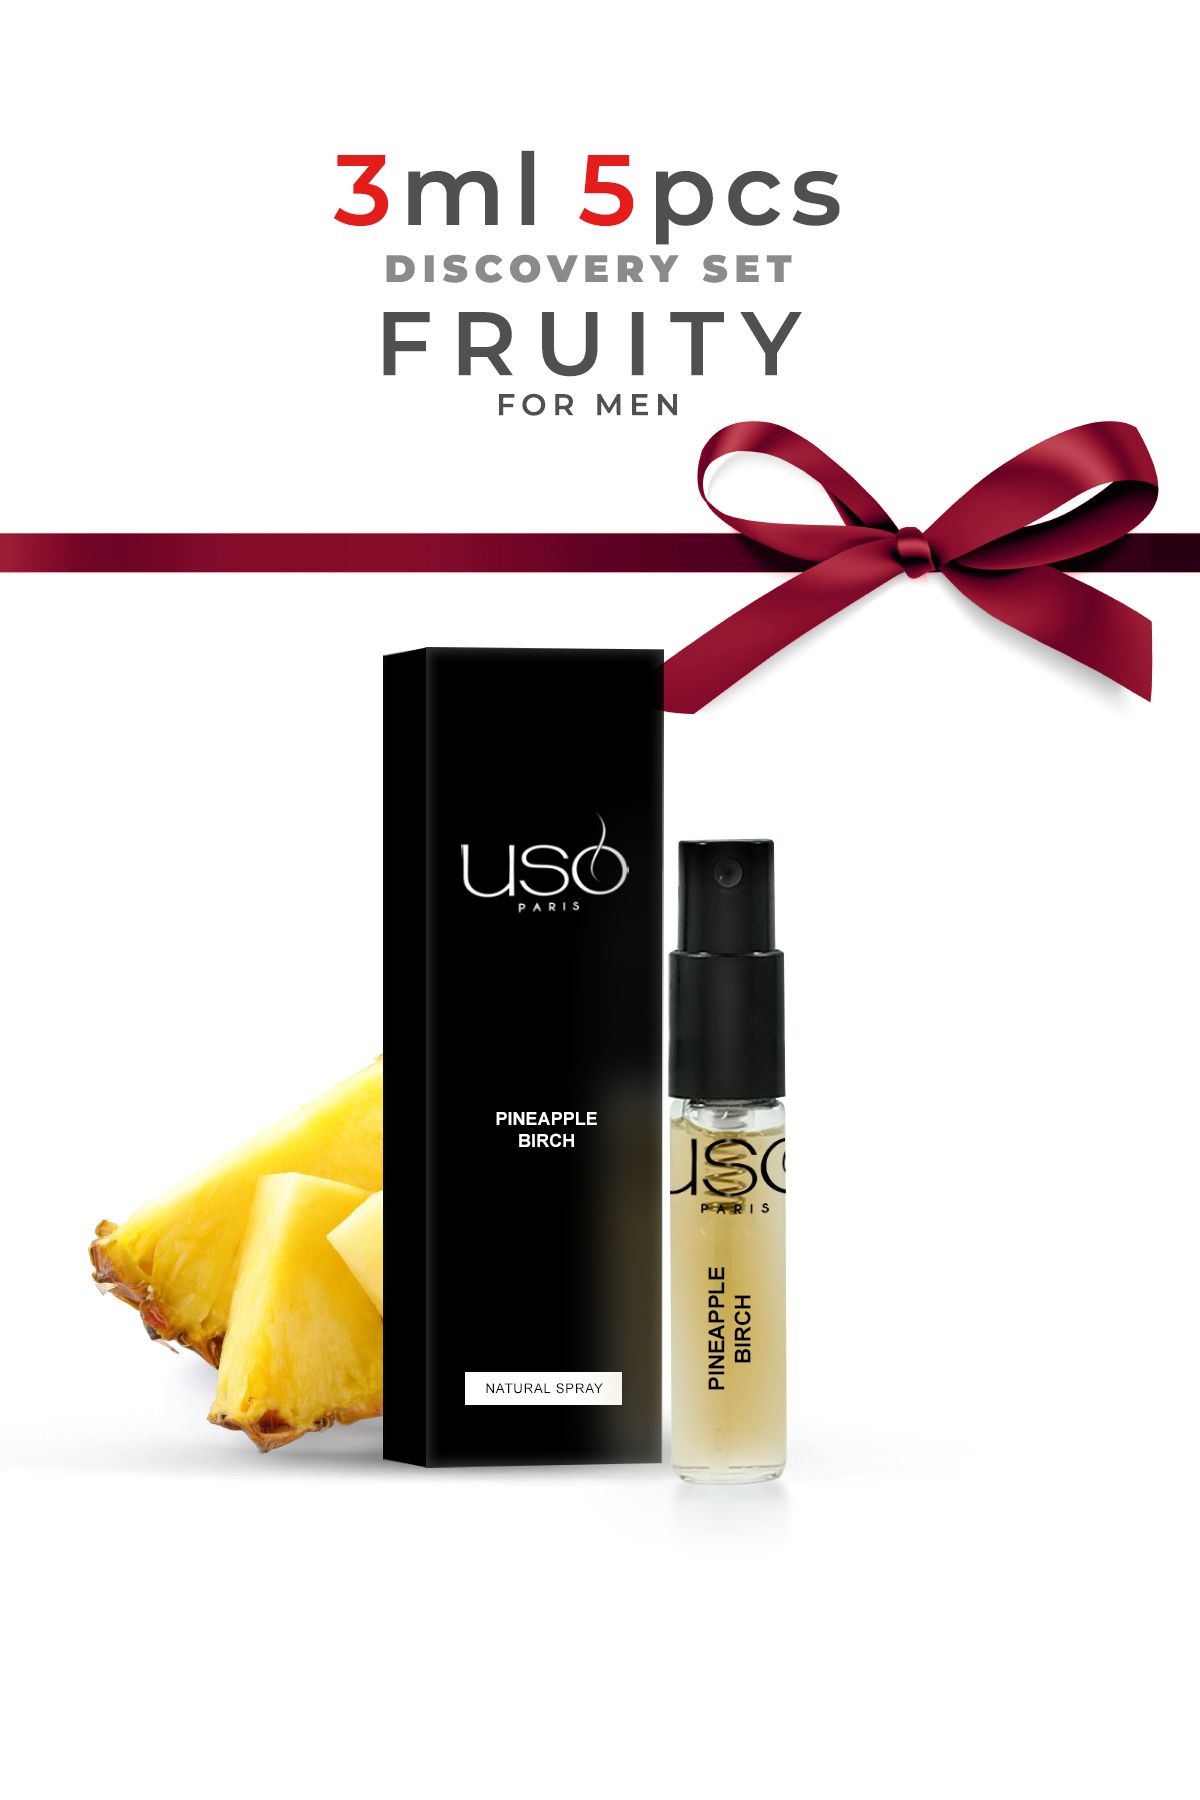 USO Fruity Parfum Discovery Set 3ml X 5 Pcs Men